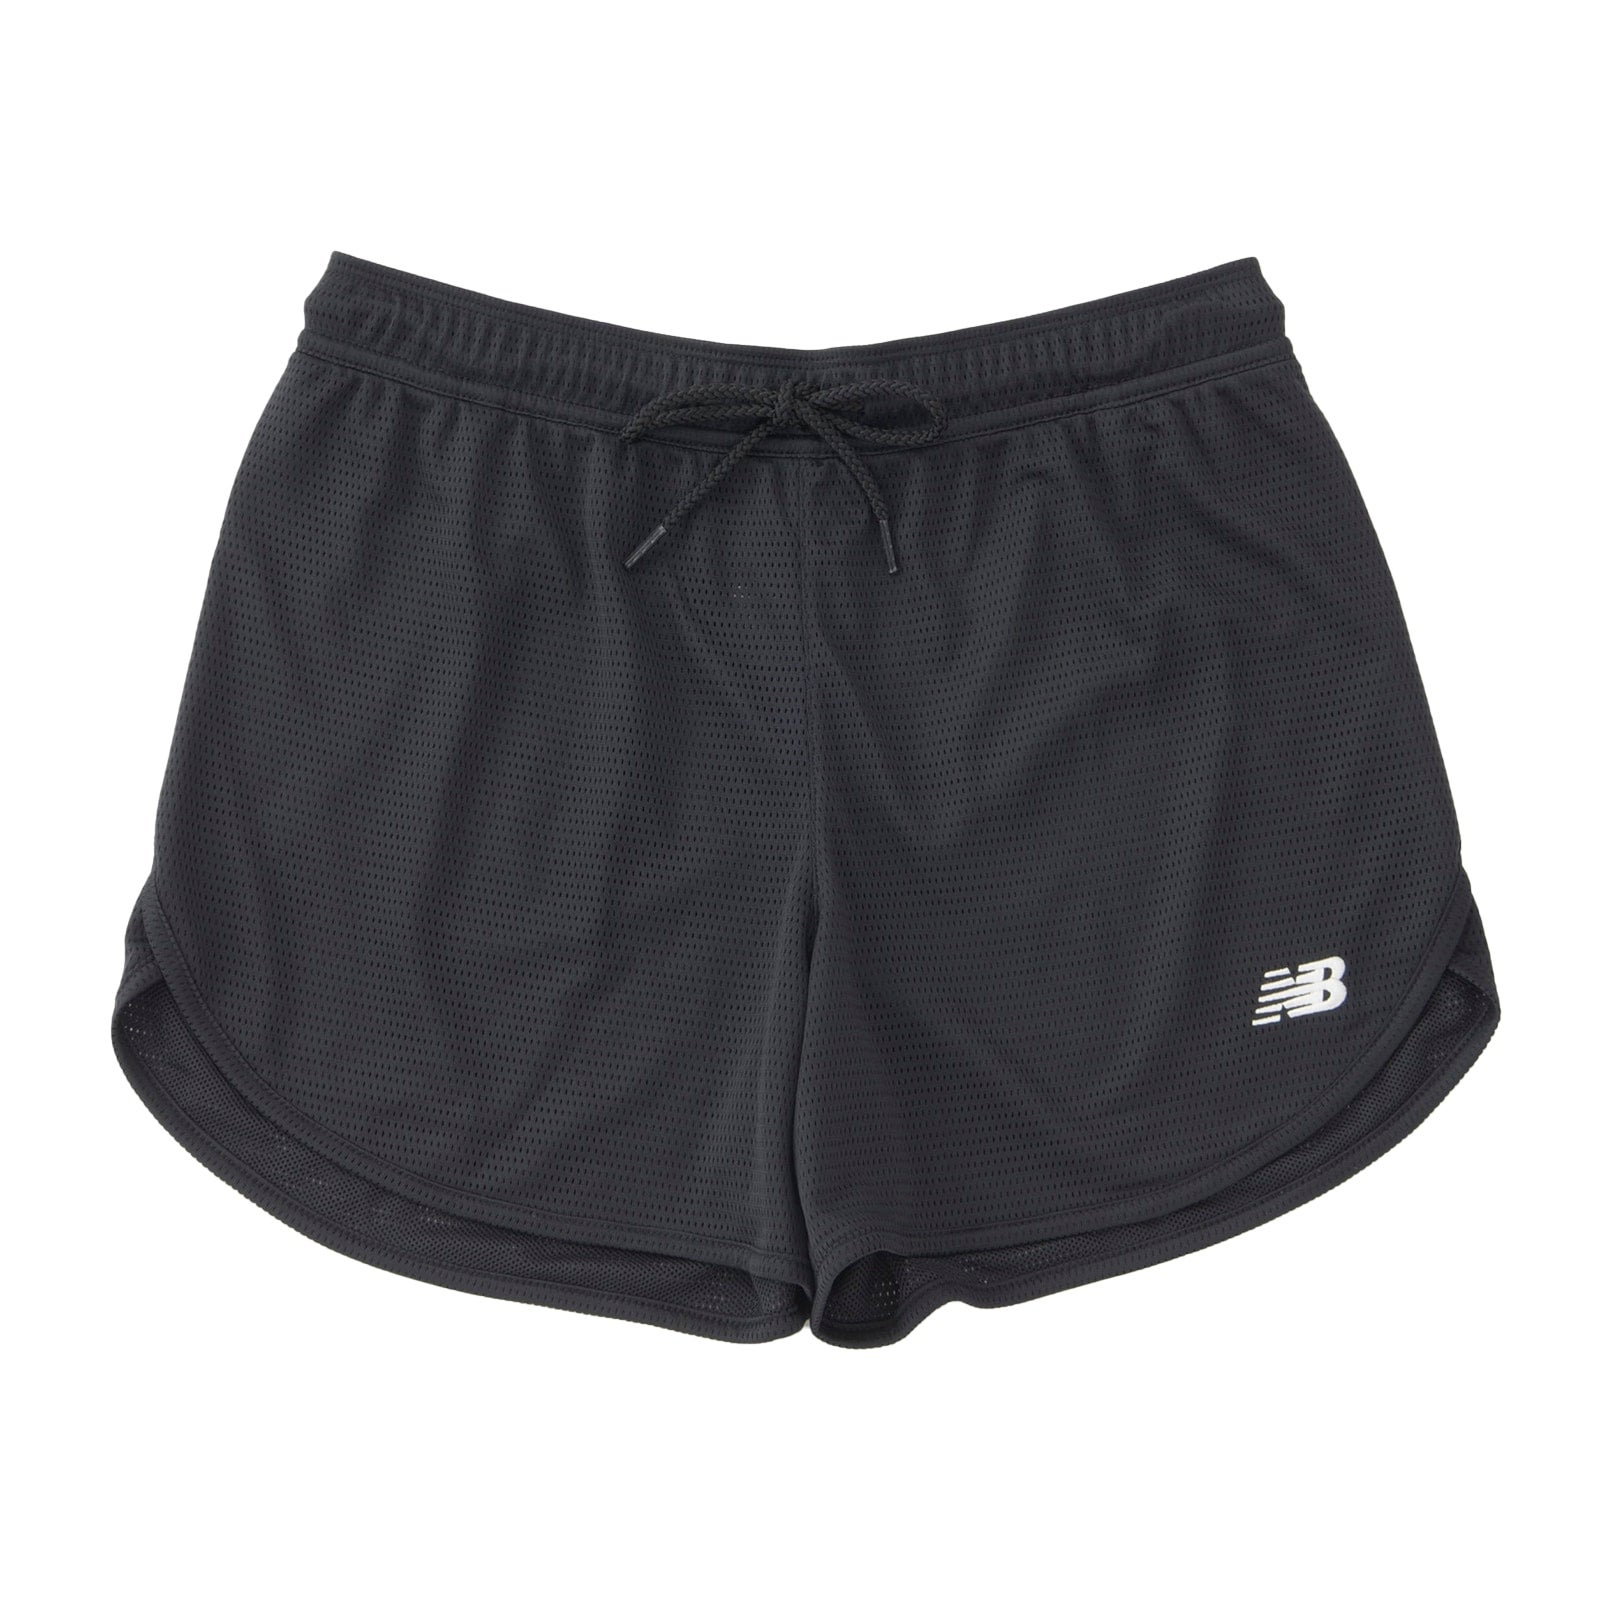 Athletics mesh shorts